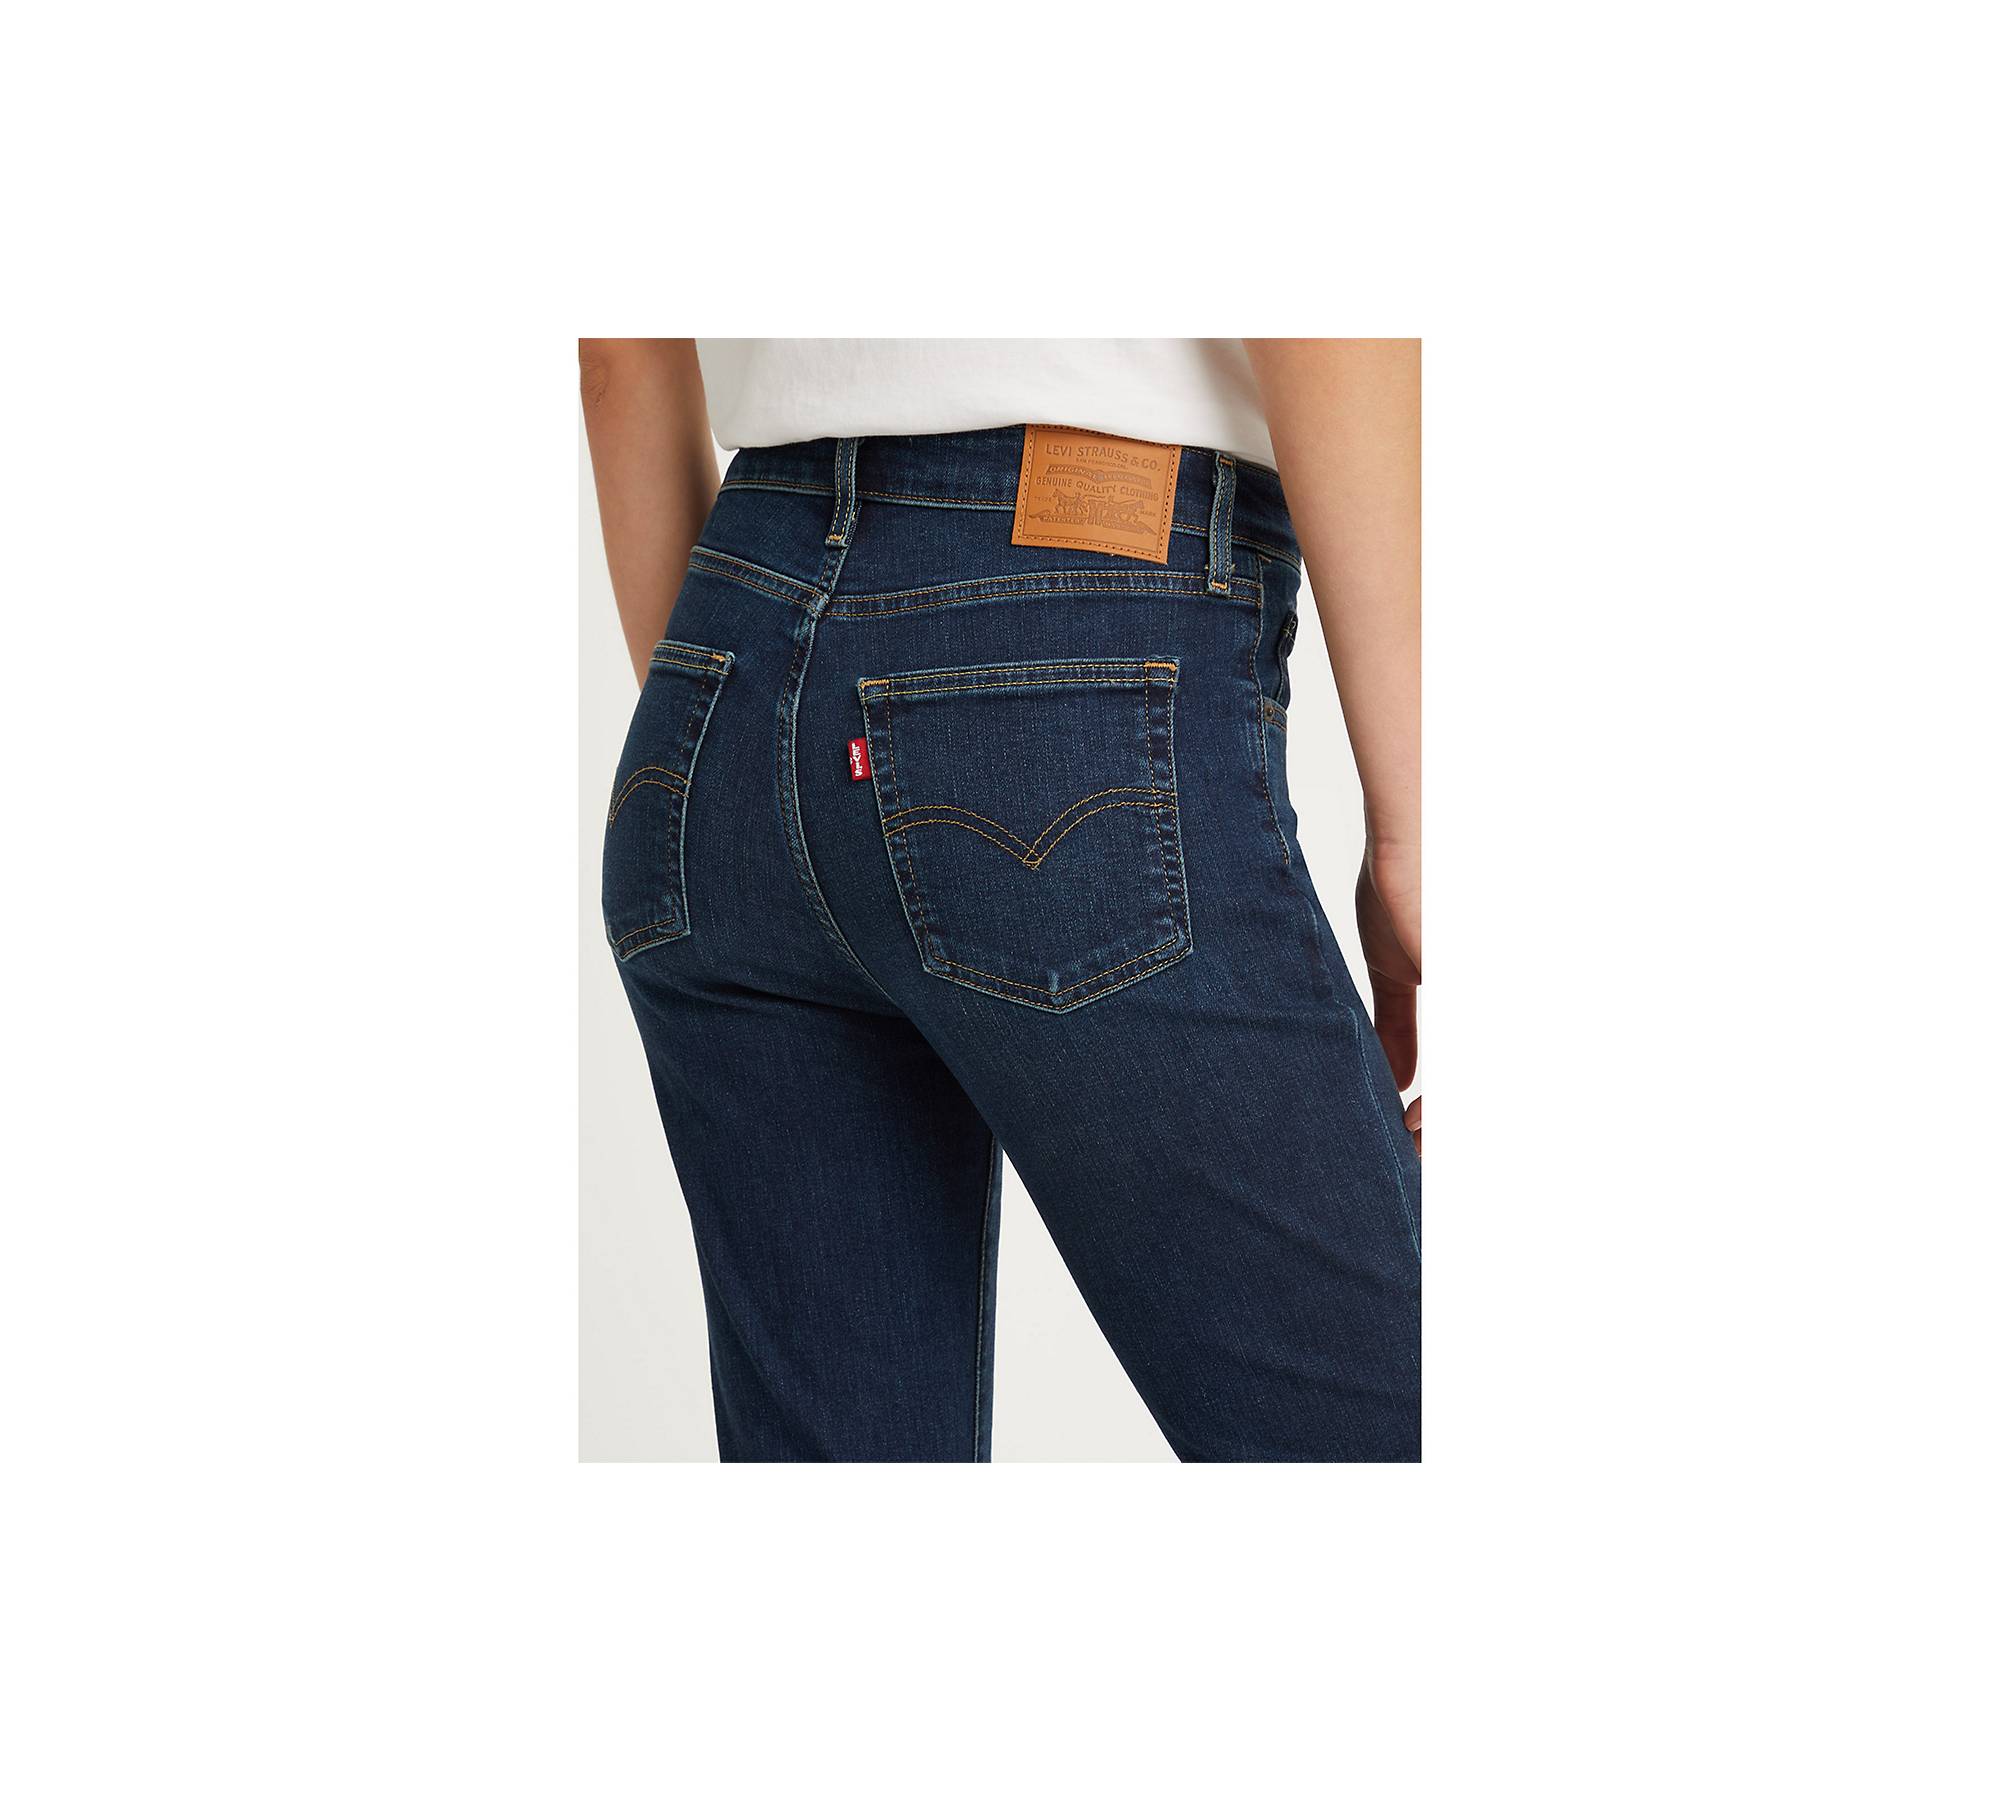 Levis Premium Womens Denim Jeans 70s High Rise Flare 34 Black Gray Wide Leg  NWT